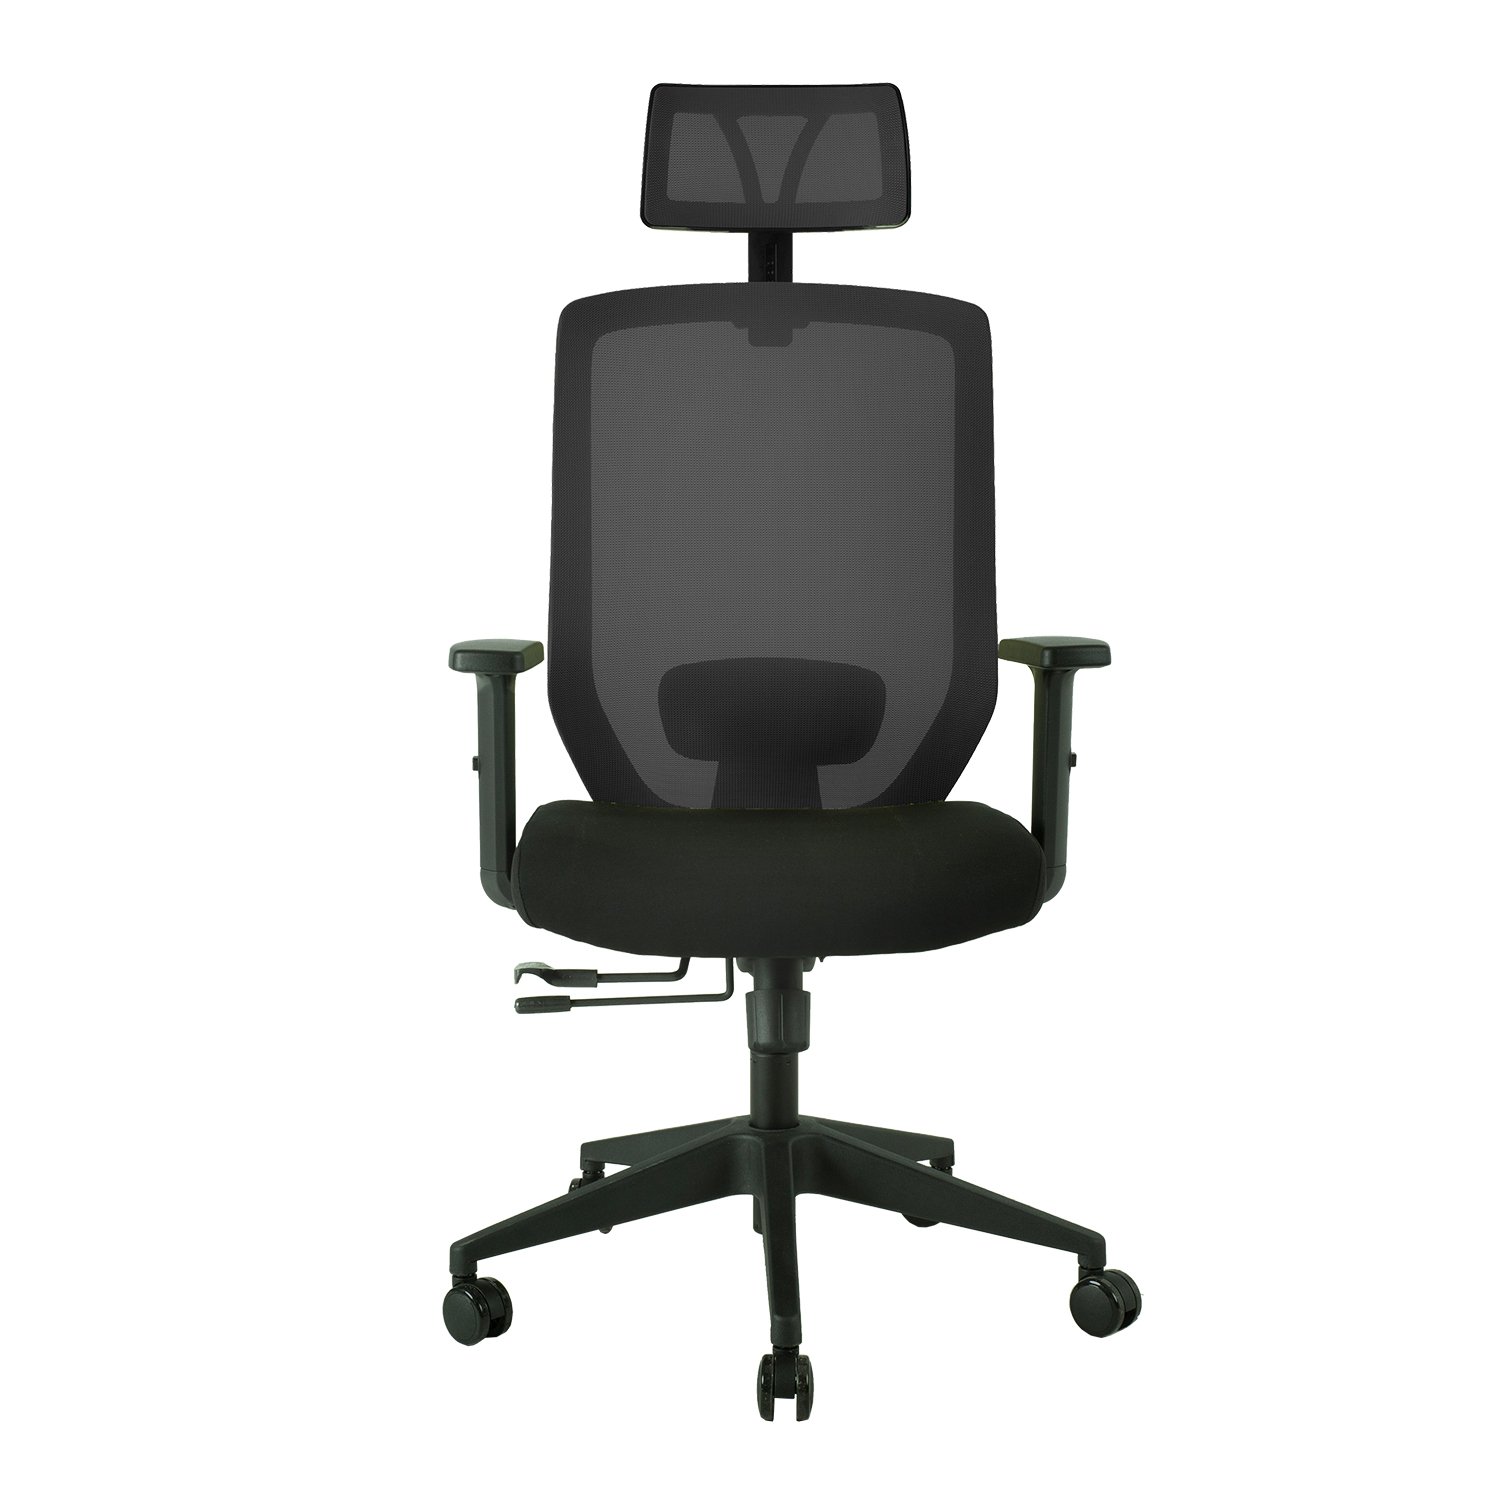 Biuro kėdė JOY, 64x64x115-125cm, juoda